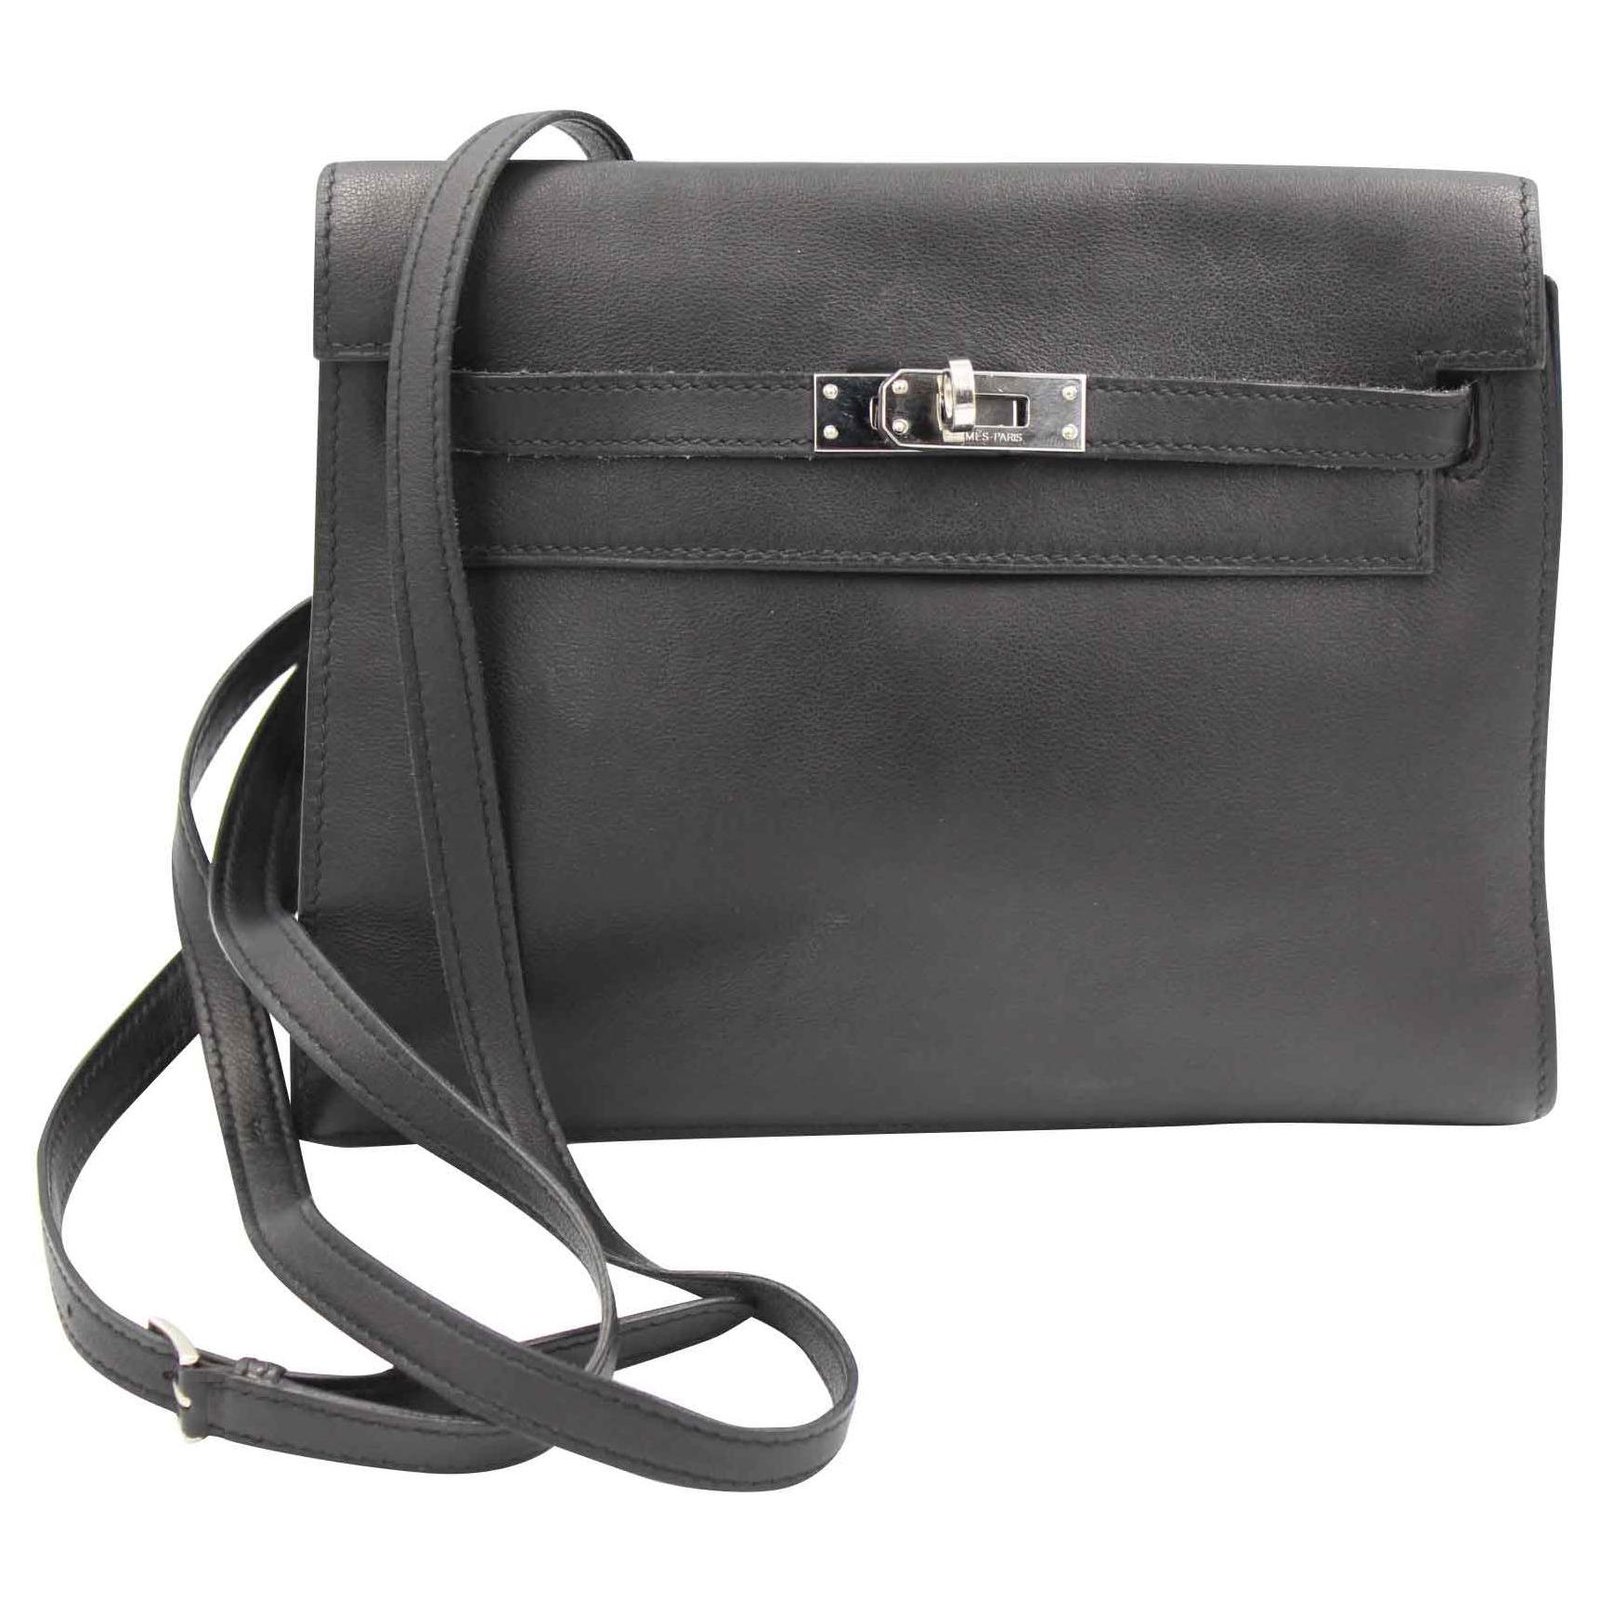 Kelly Danse leather handbag